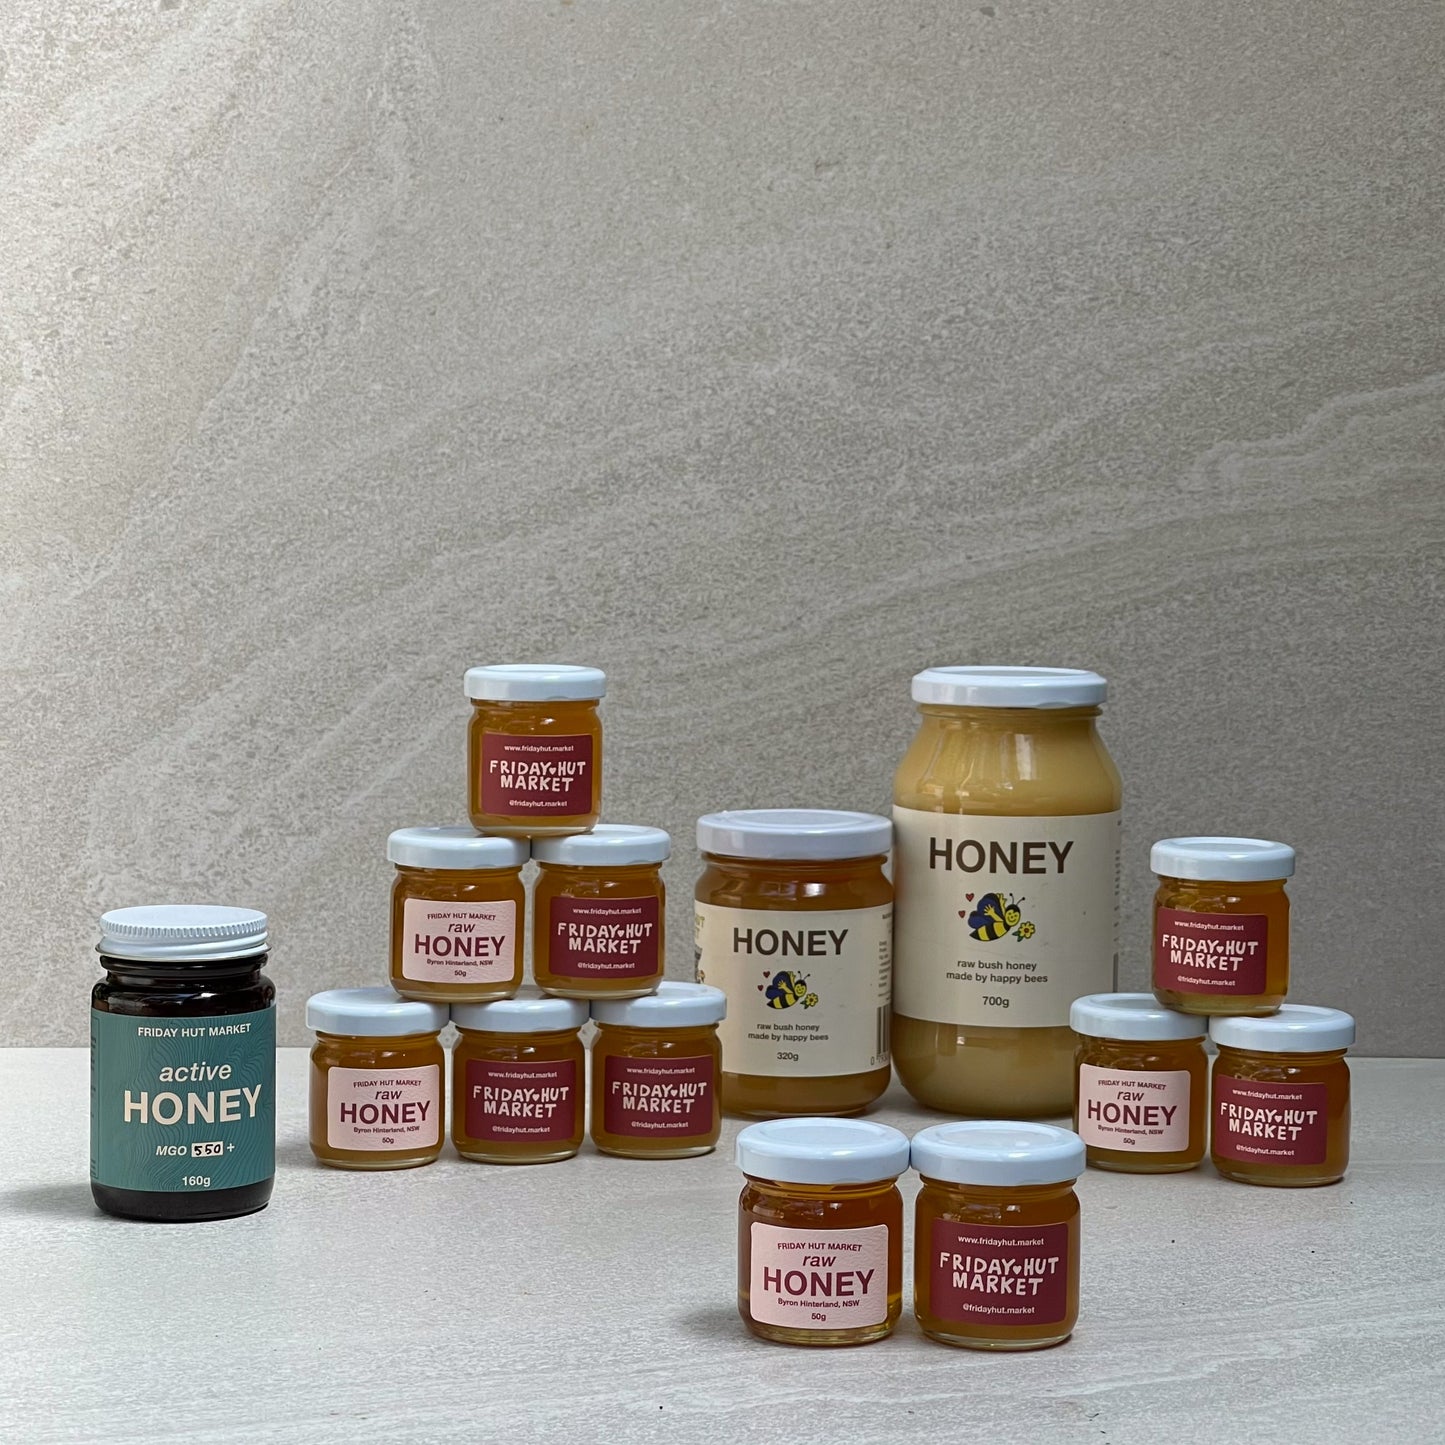 50g, 320g and 700g jars of Friday Hut Market Raw Bush Honey, and one jars of MG) 550+ Active Jellybush Manuka Honey.